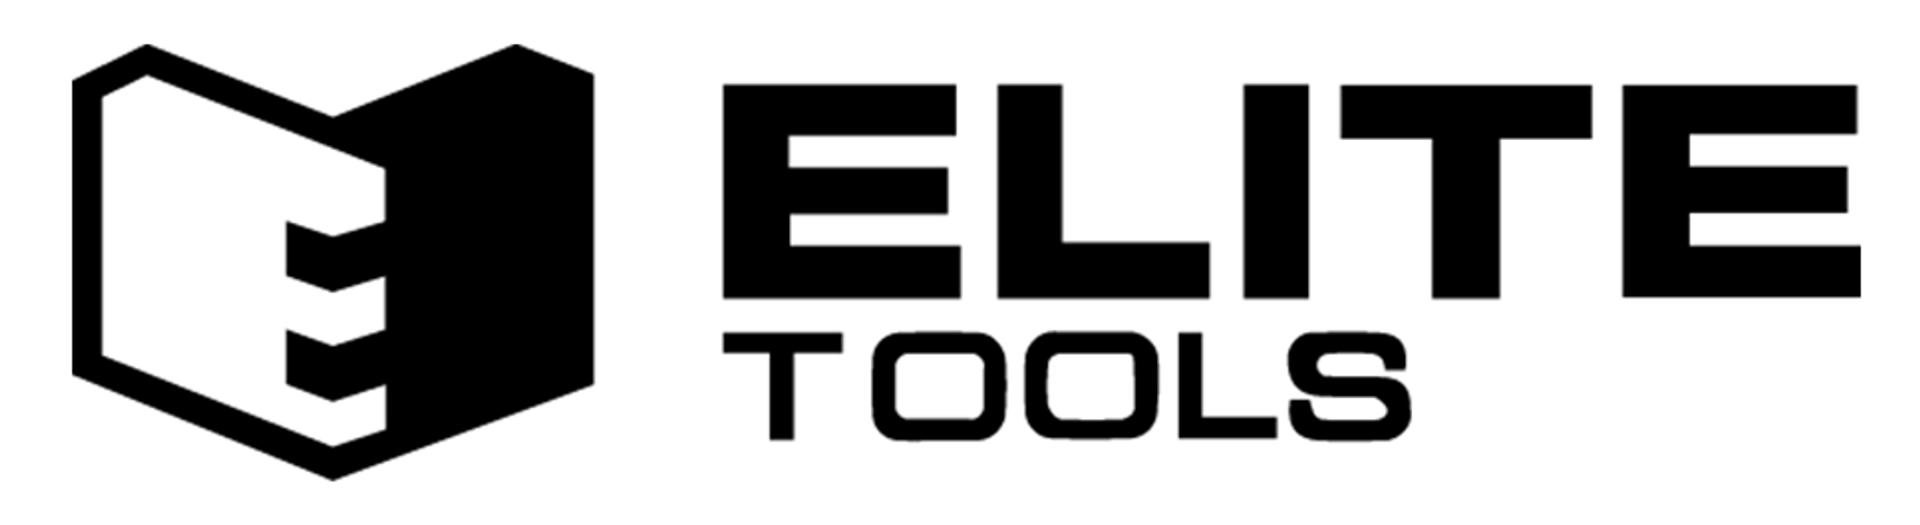 ELITE TOOLS logo de circulaire